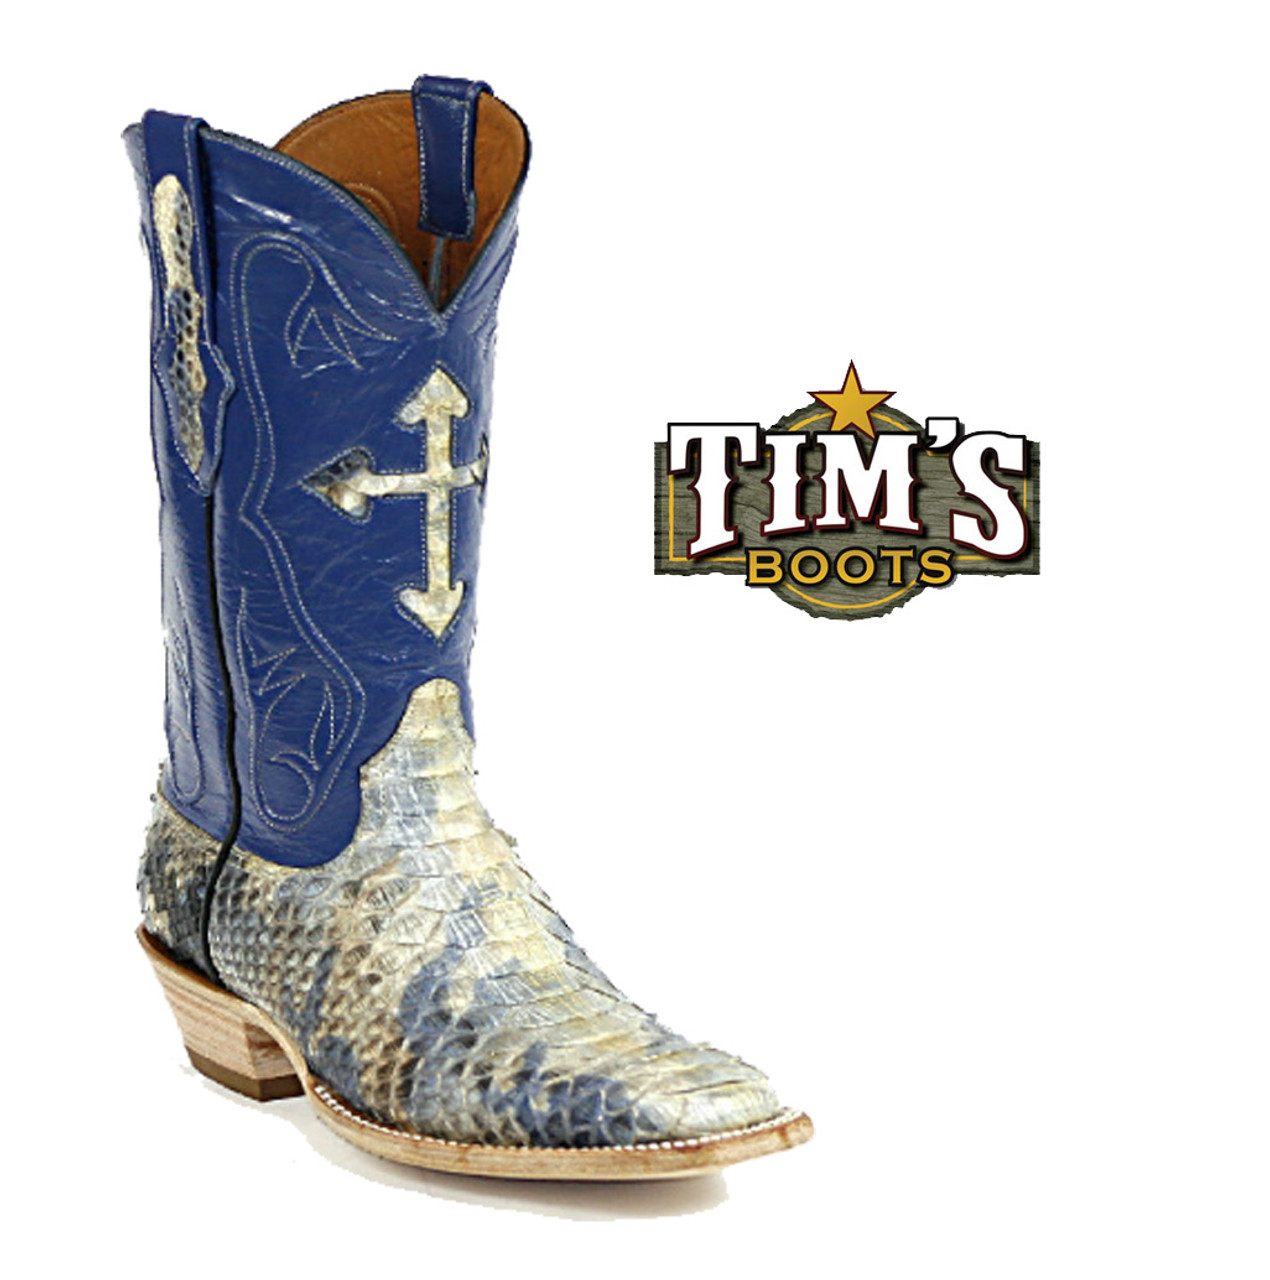 blue cowboy boots